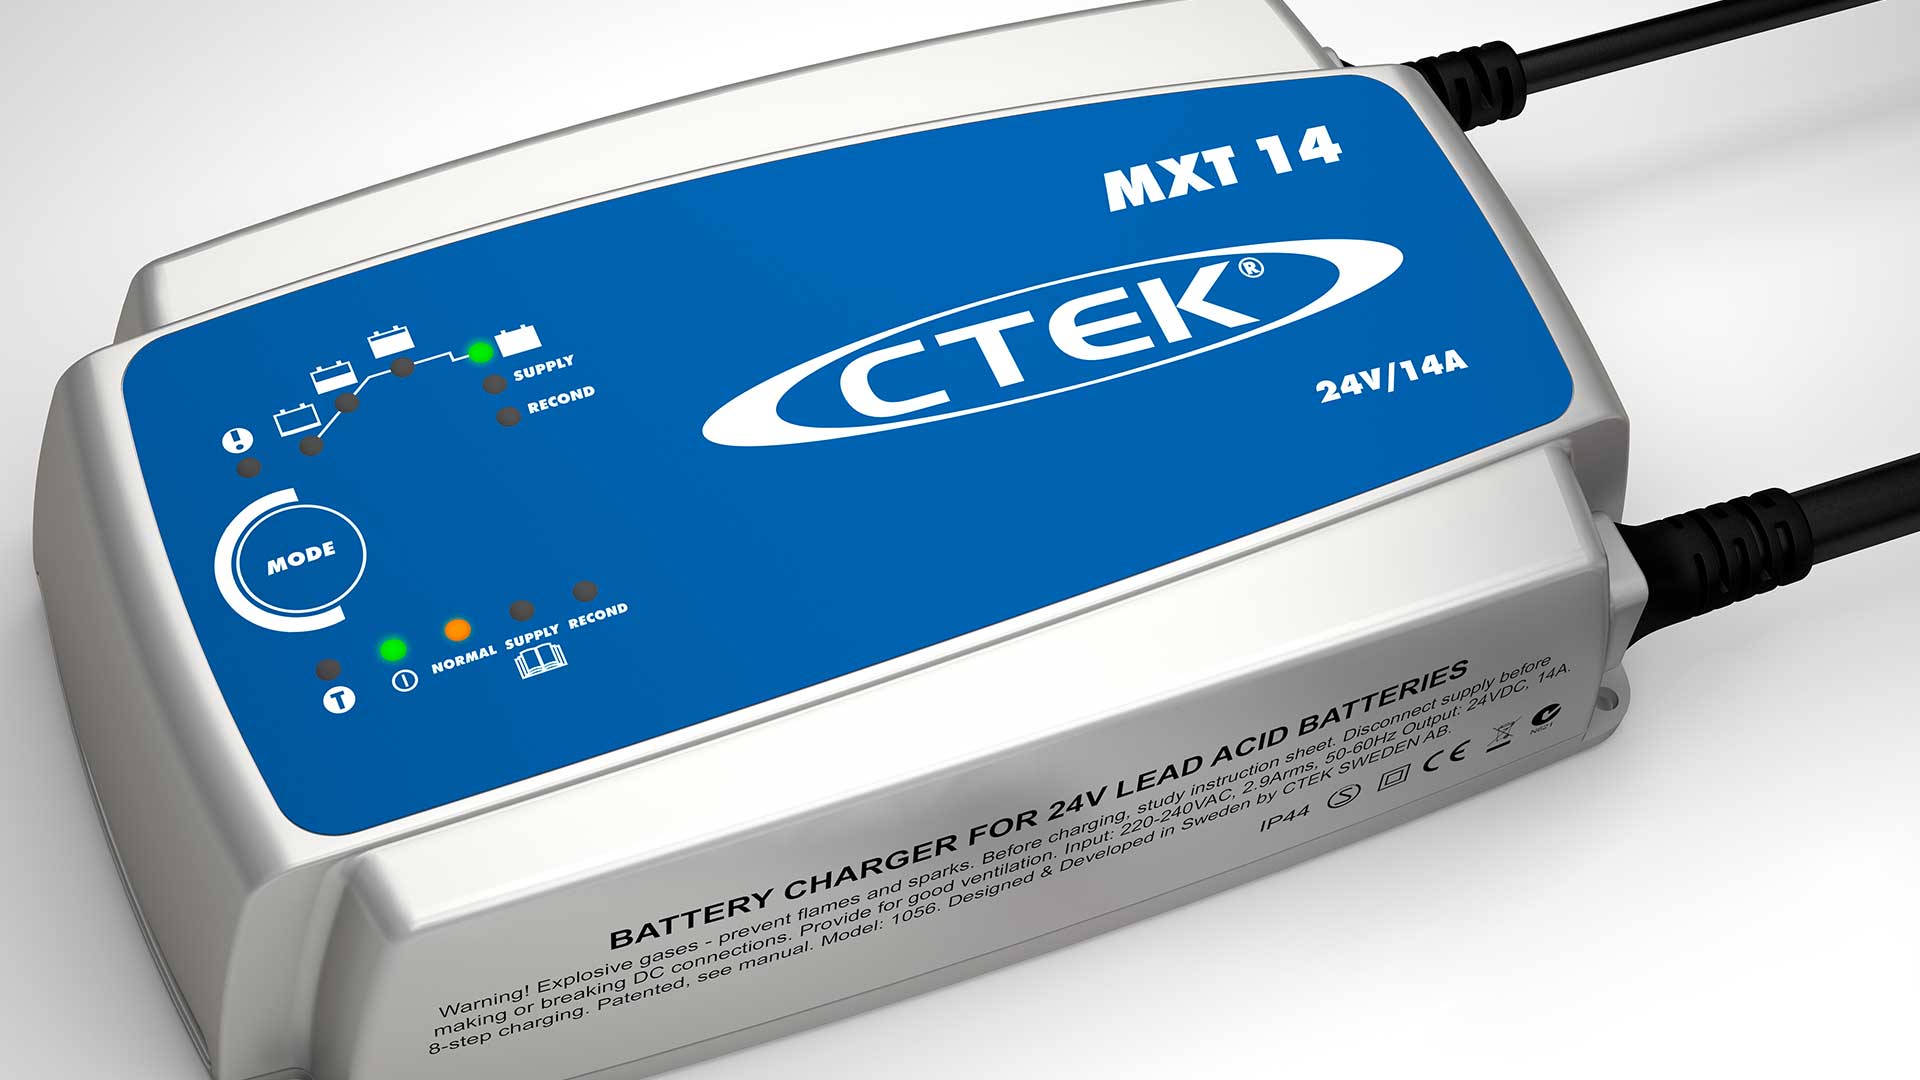 Caricabatterie MXT 14  CTEK